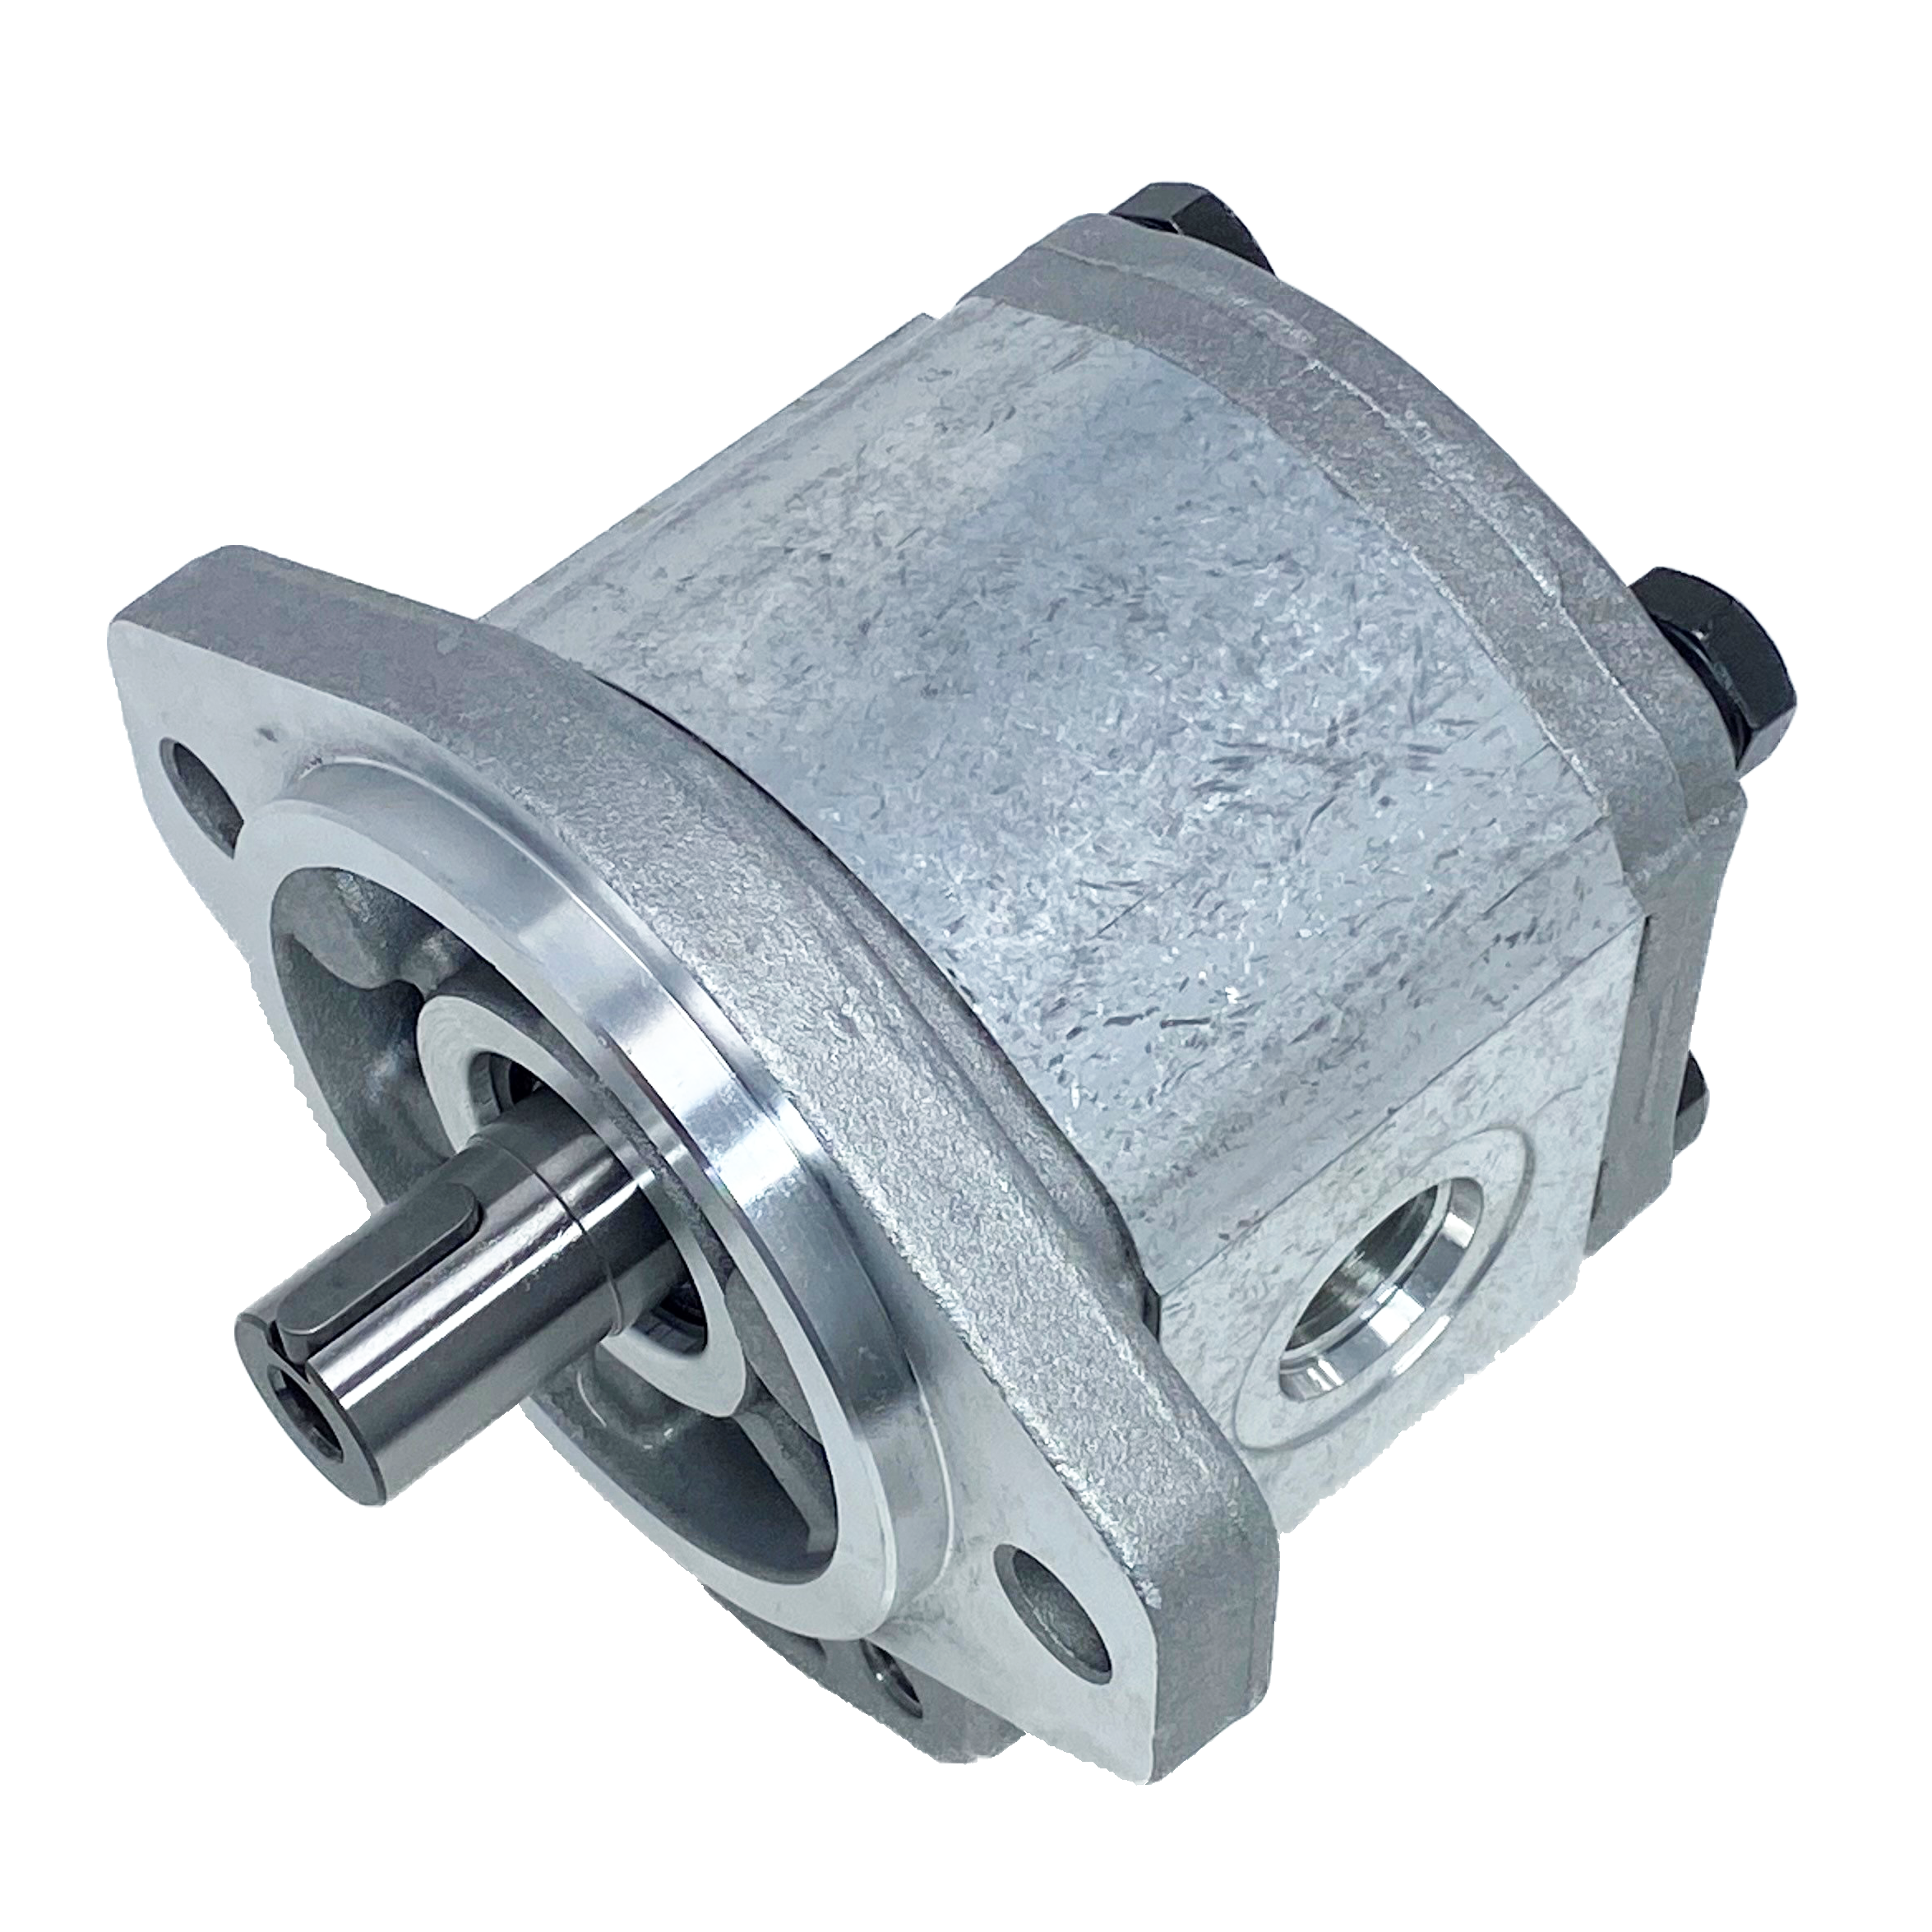 PLM20.8B0-50S1-LOC/OC-N-EL : Casappa Polaris Gear Motor, 8.26cc, 3625psi Rated, 3500RPM, Reversible Interior Drain, 3/4" Bore x 3/16" Key Shaft, SAE A 2-Bolt Flange, 0.625 (5/8") #10 SAE Inlet, 0.625 (5/8") #10 SAE Outlet, Aluminum Body & Flange